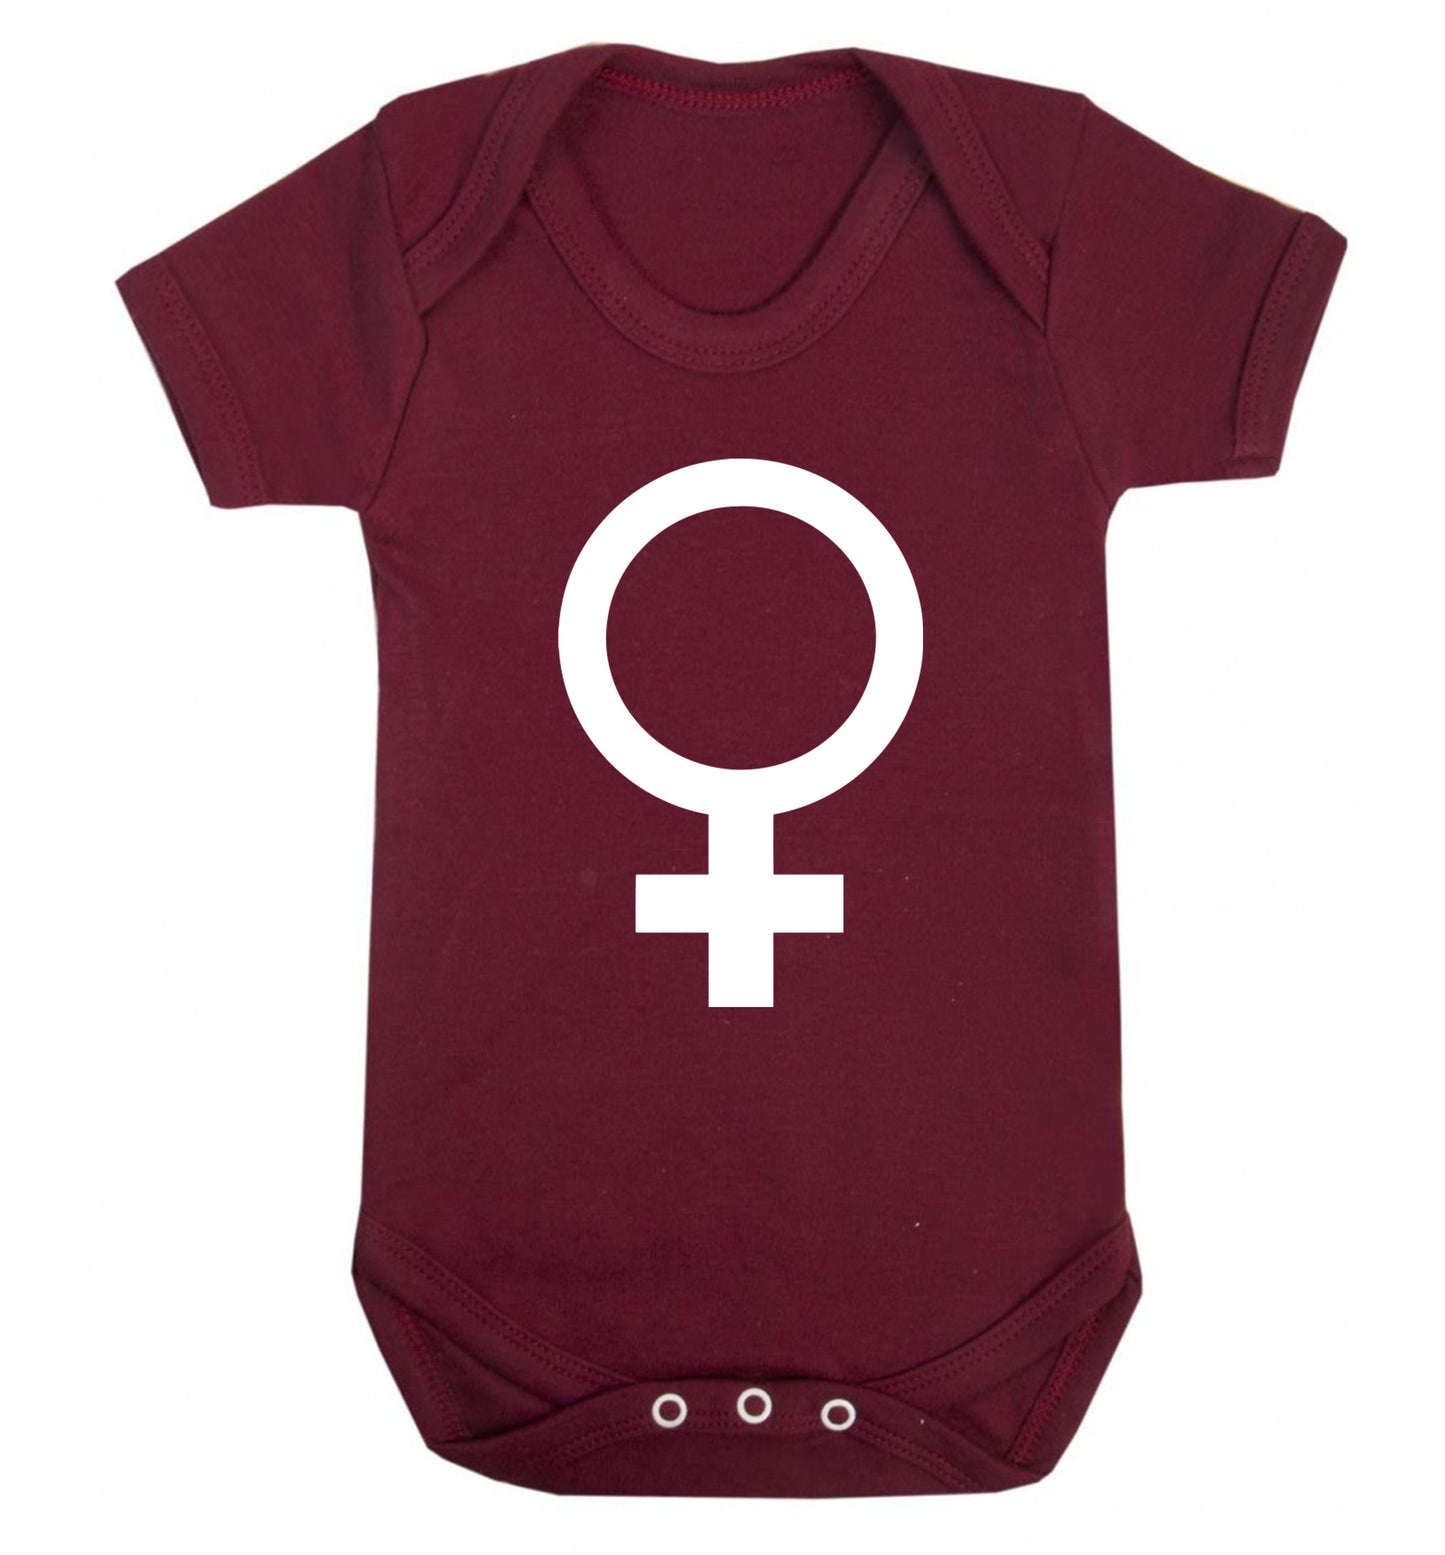 Female symbol large Baby Vest maroon 18-24 months